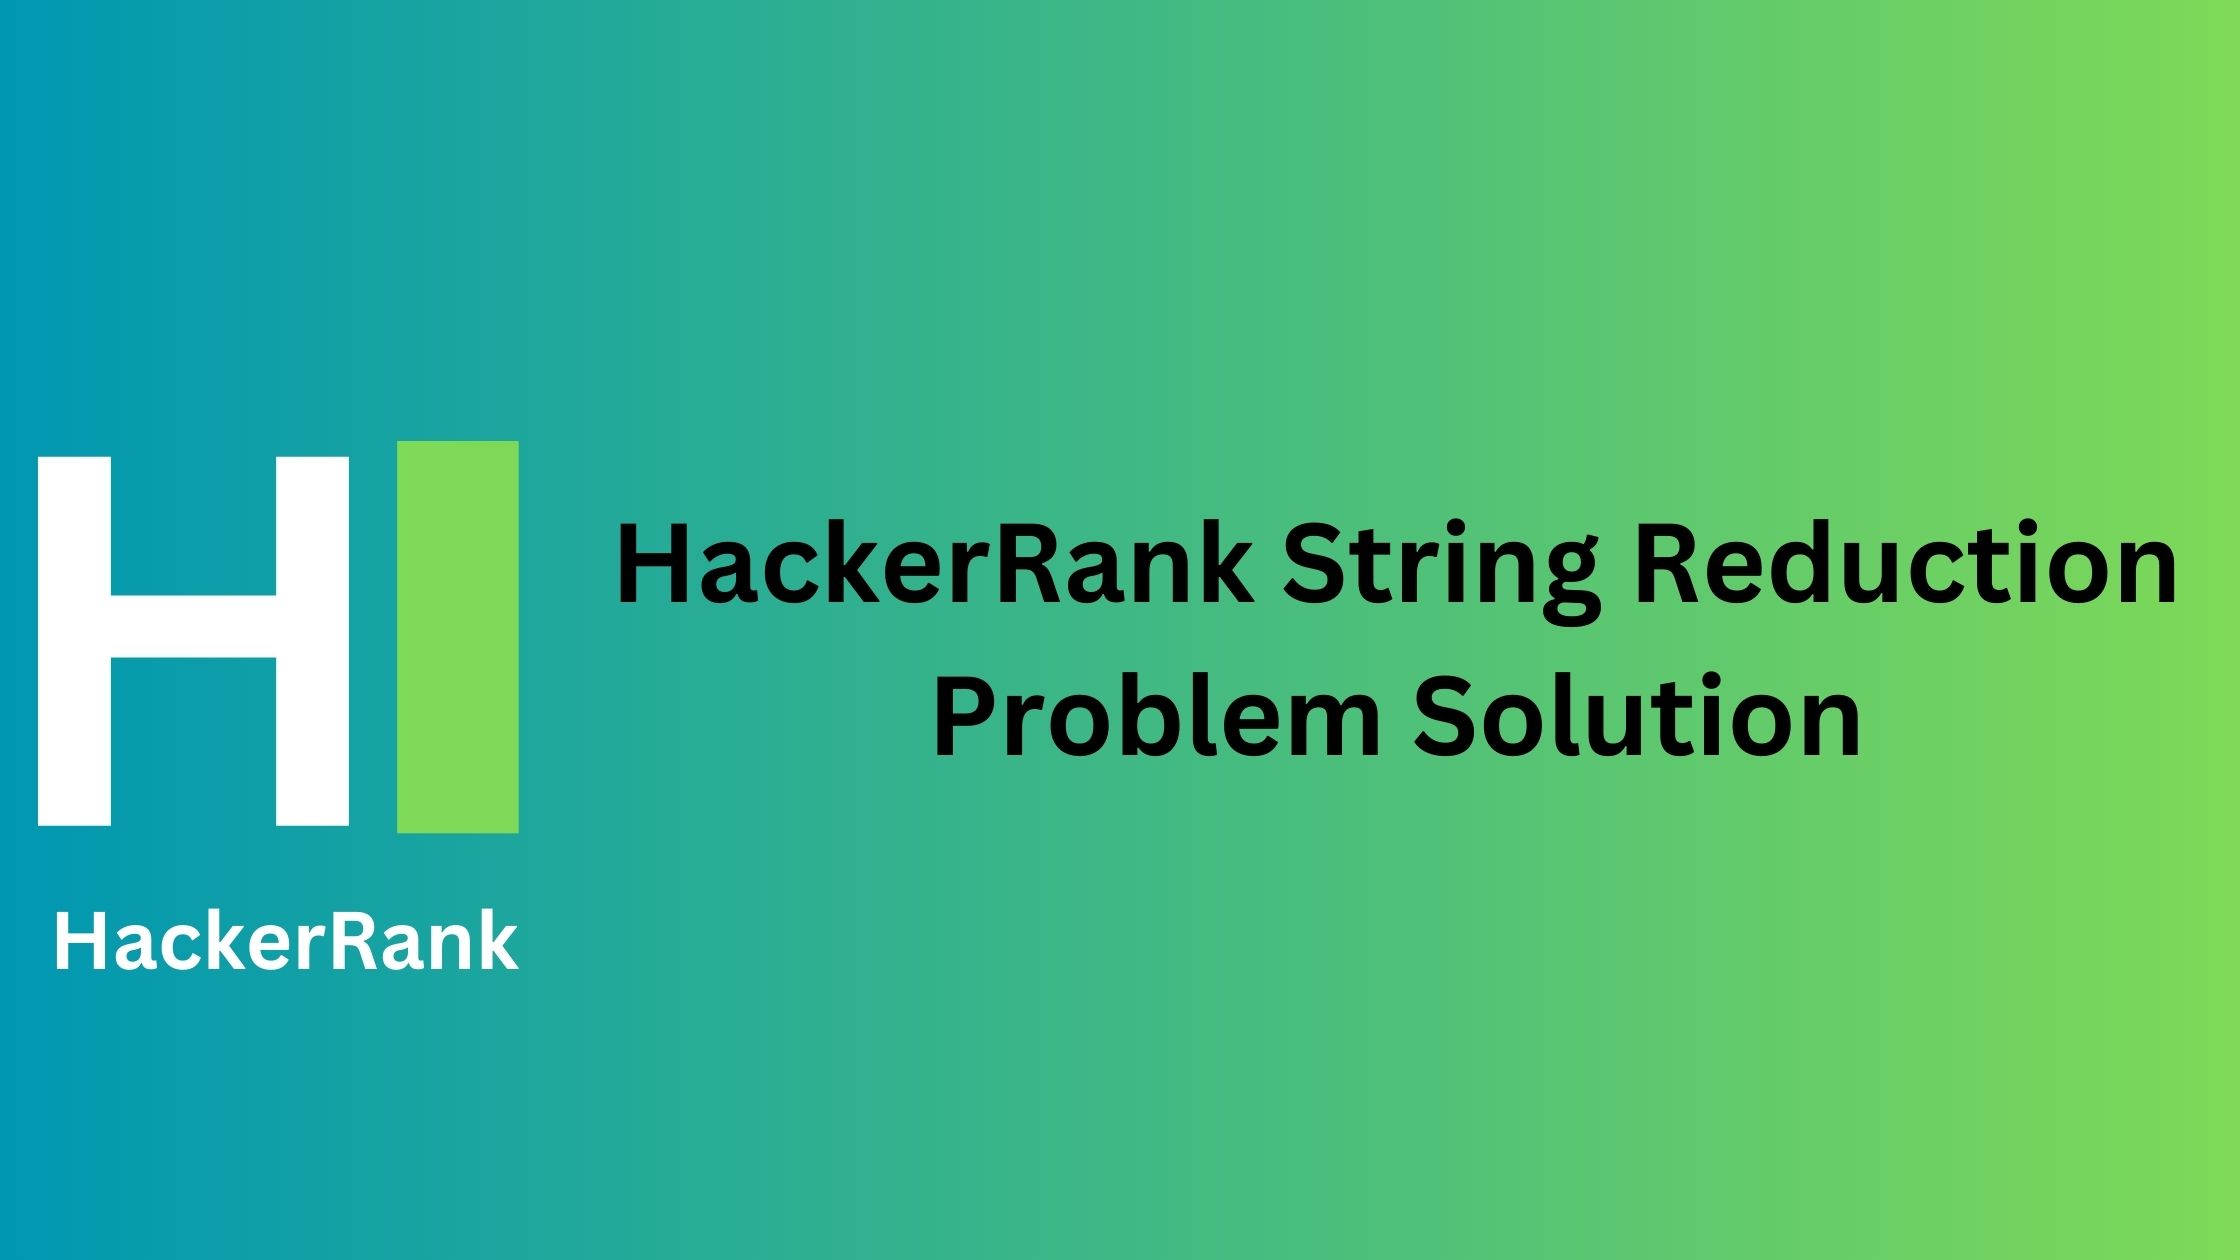 HackerRank String Reduction Problem Solution